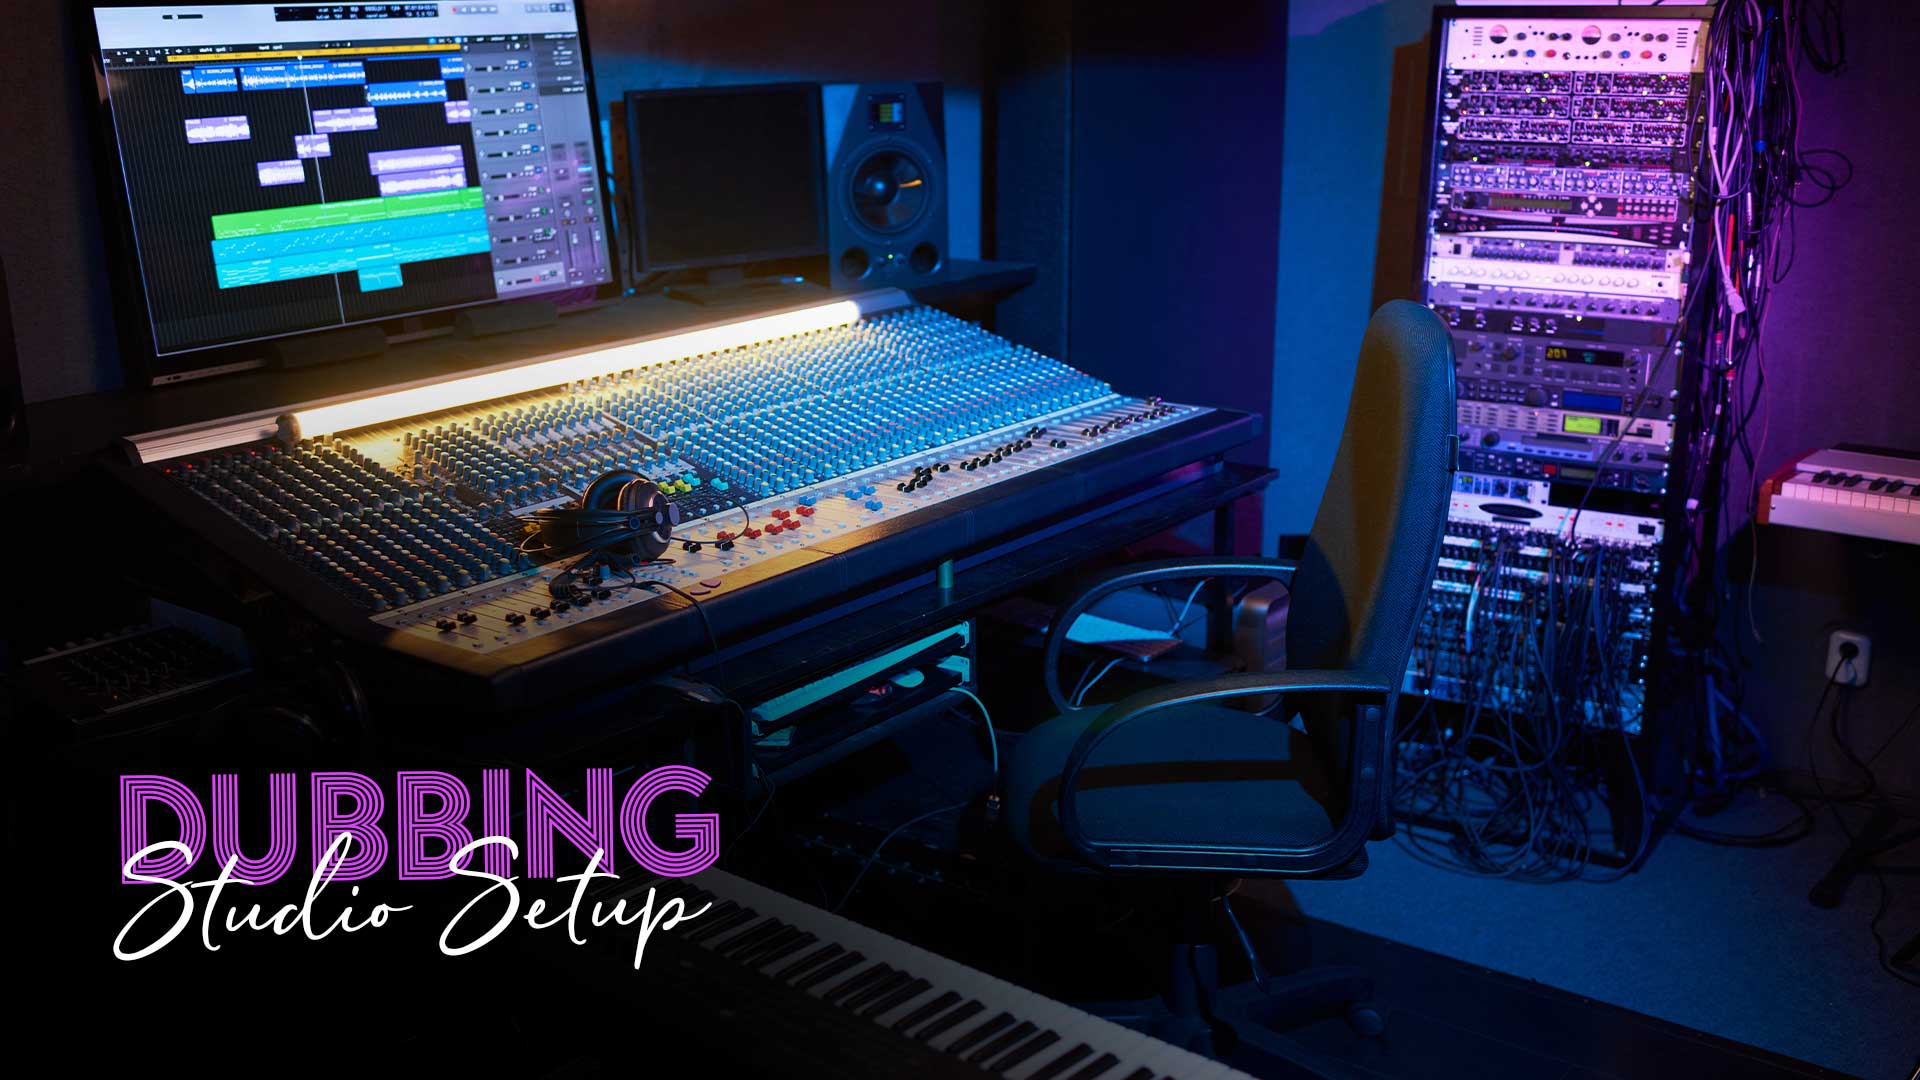 Dubbing studio setup